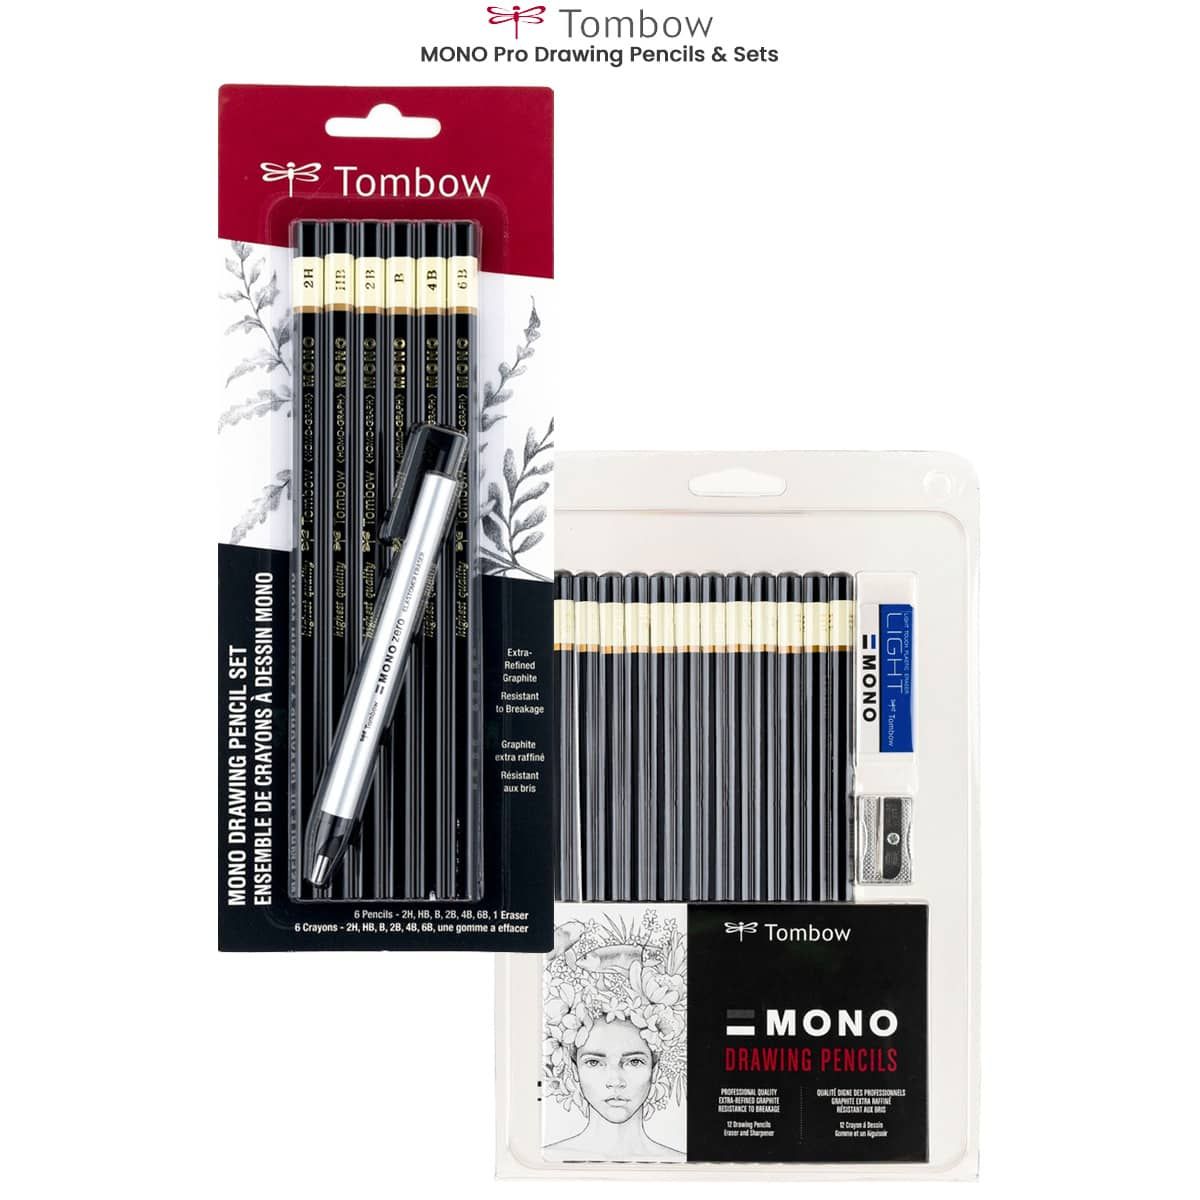 Tombow MONO Pro Drawing Pencils & Sets